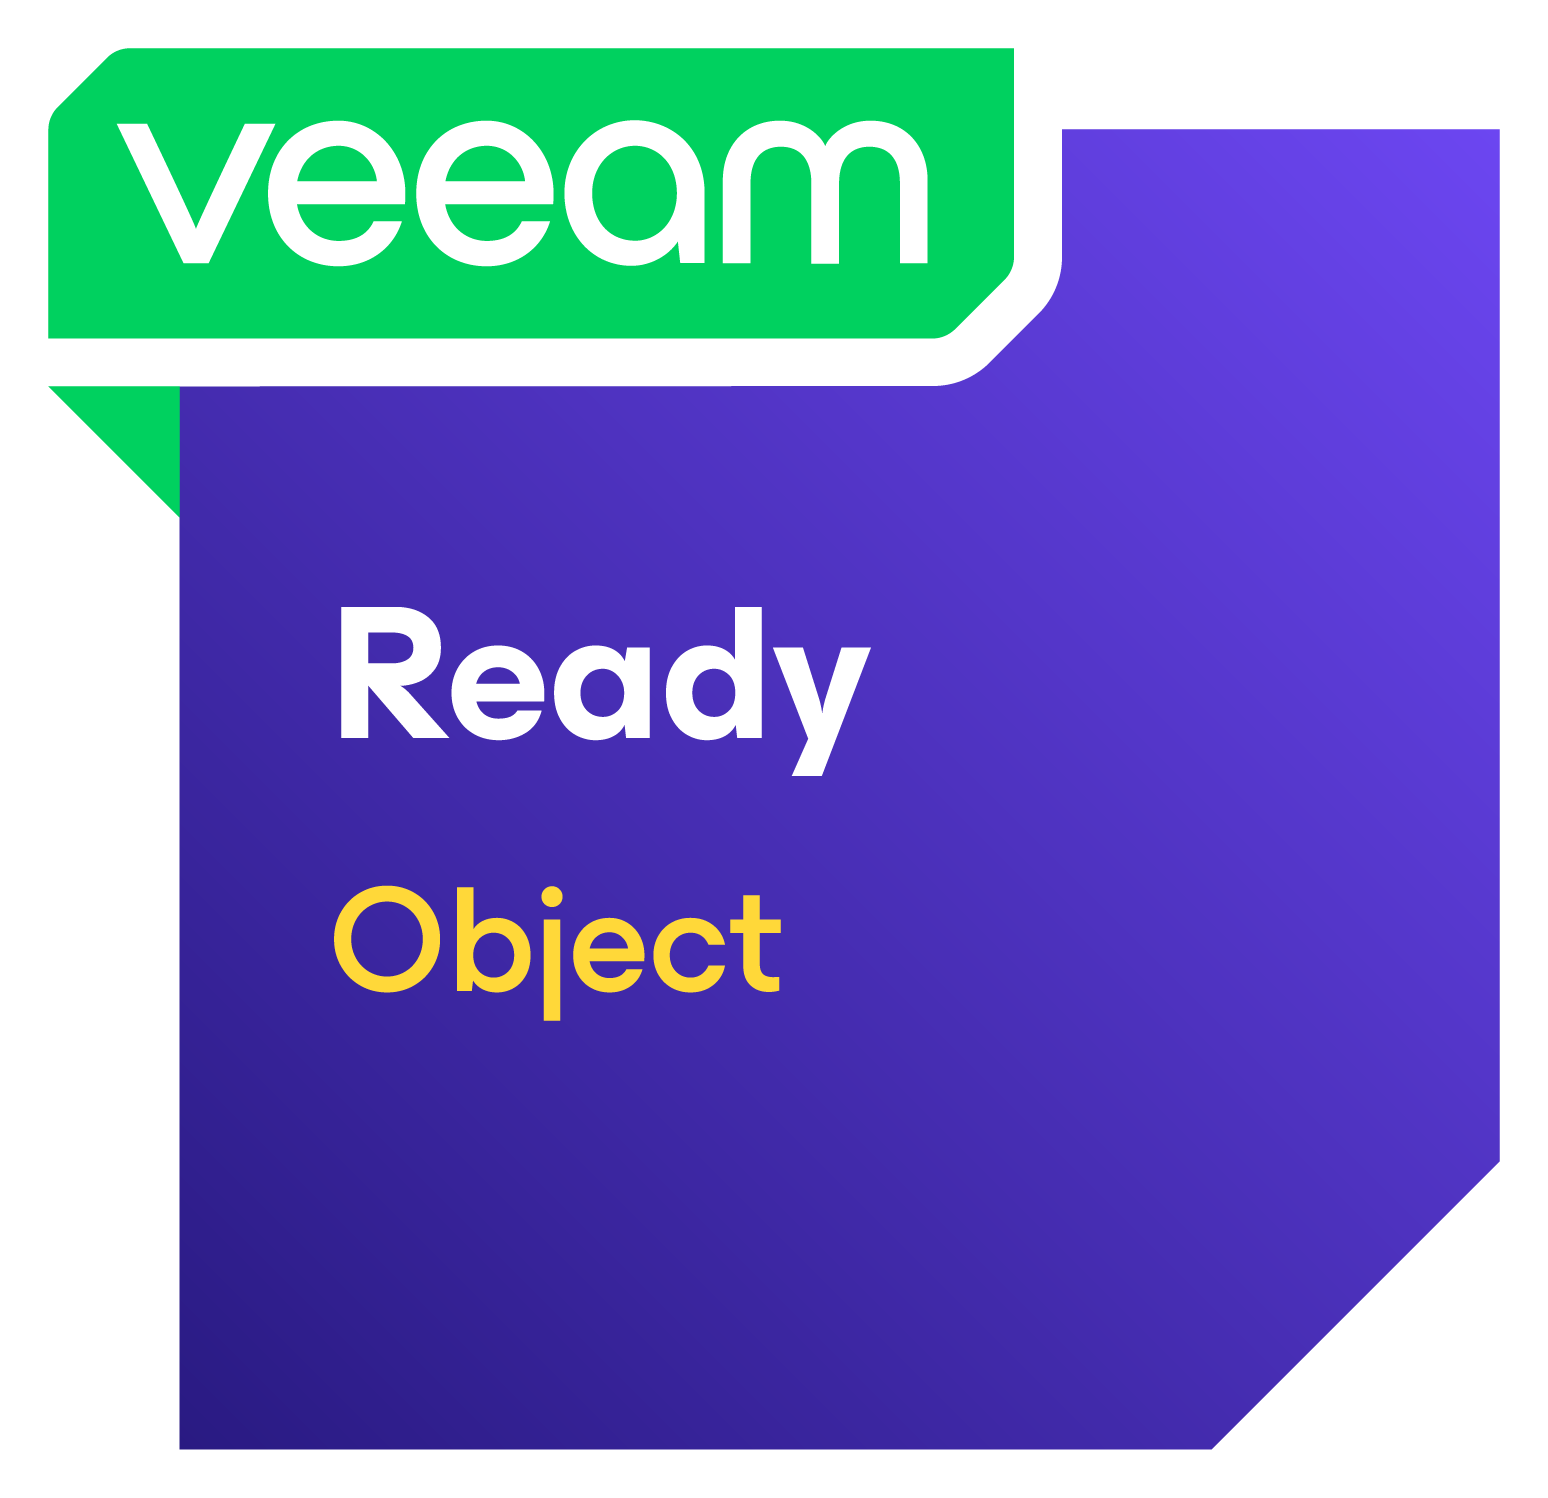 Veeam ready object